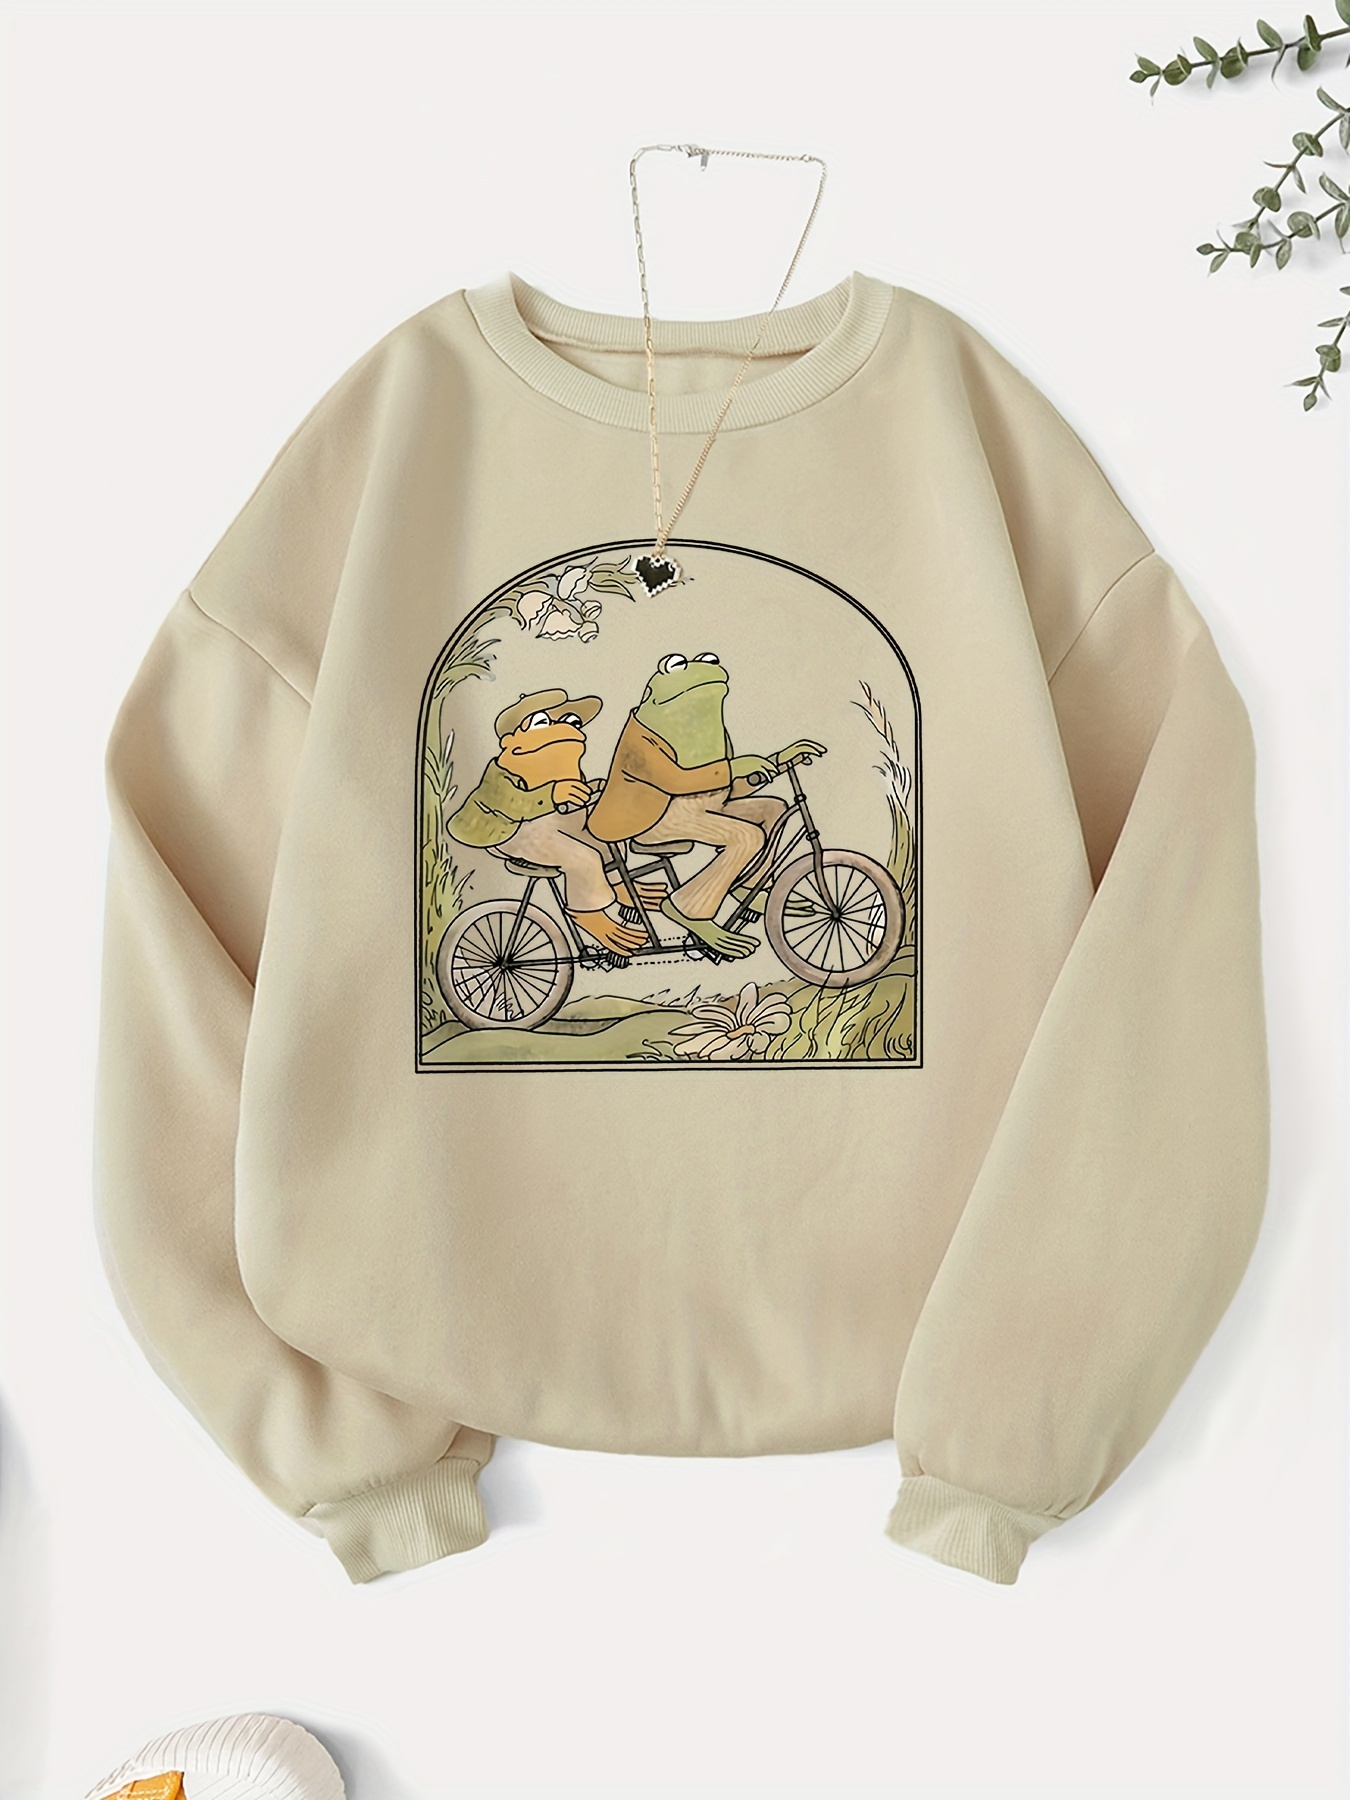 Over The Garden Wall Shirt Sweatshirt Frog Vintage Cartoon Unisex